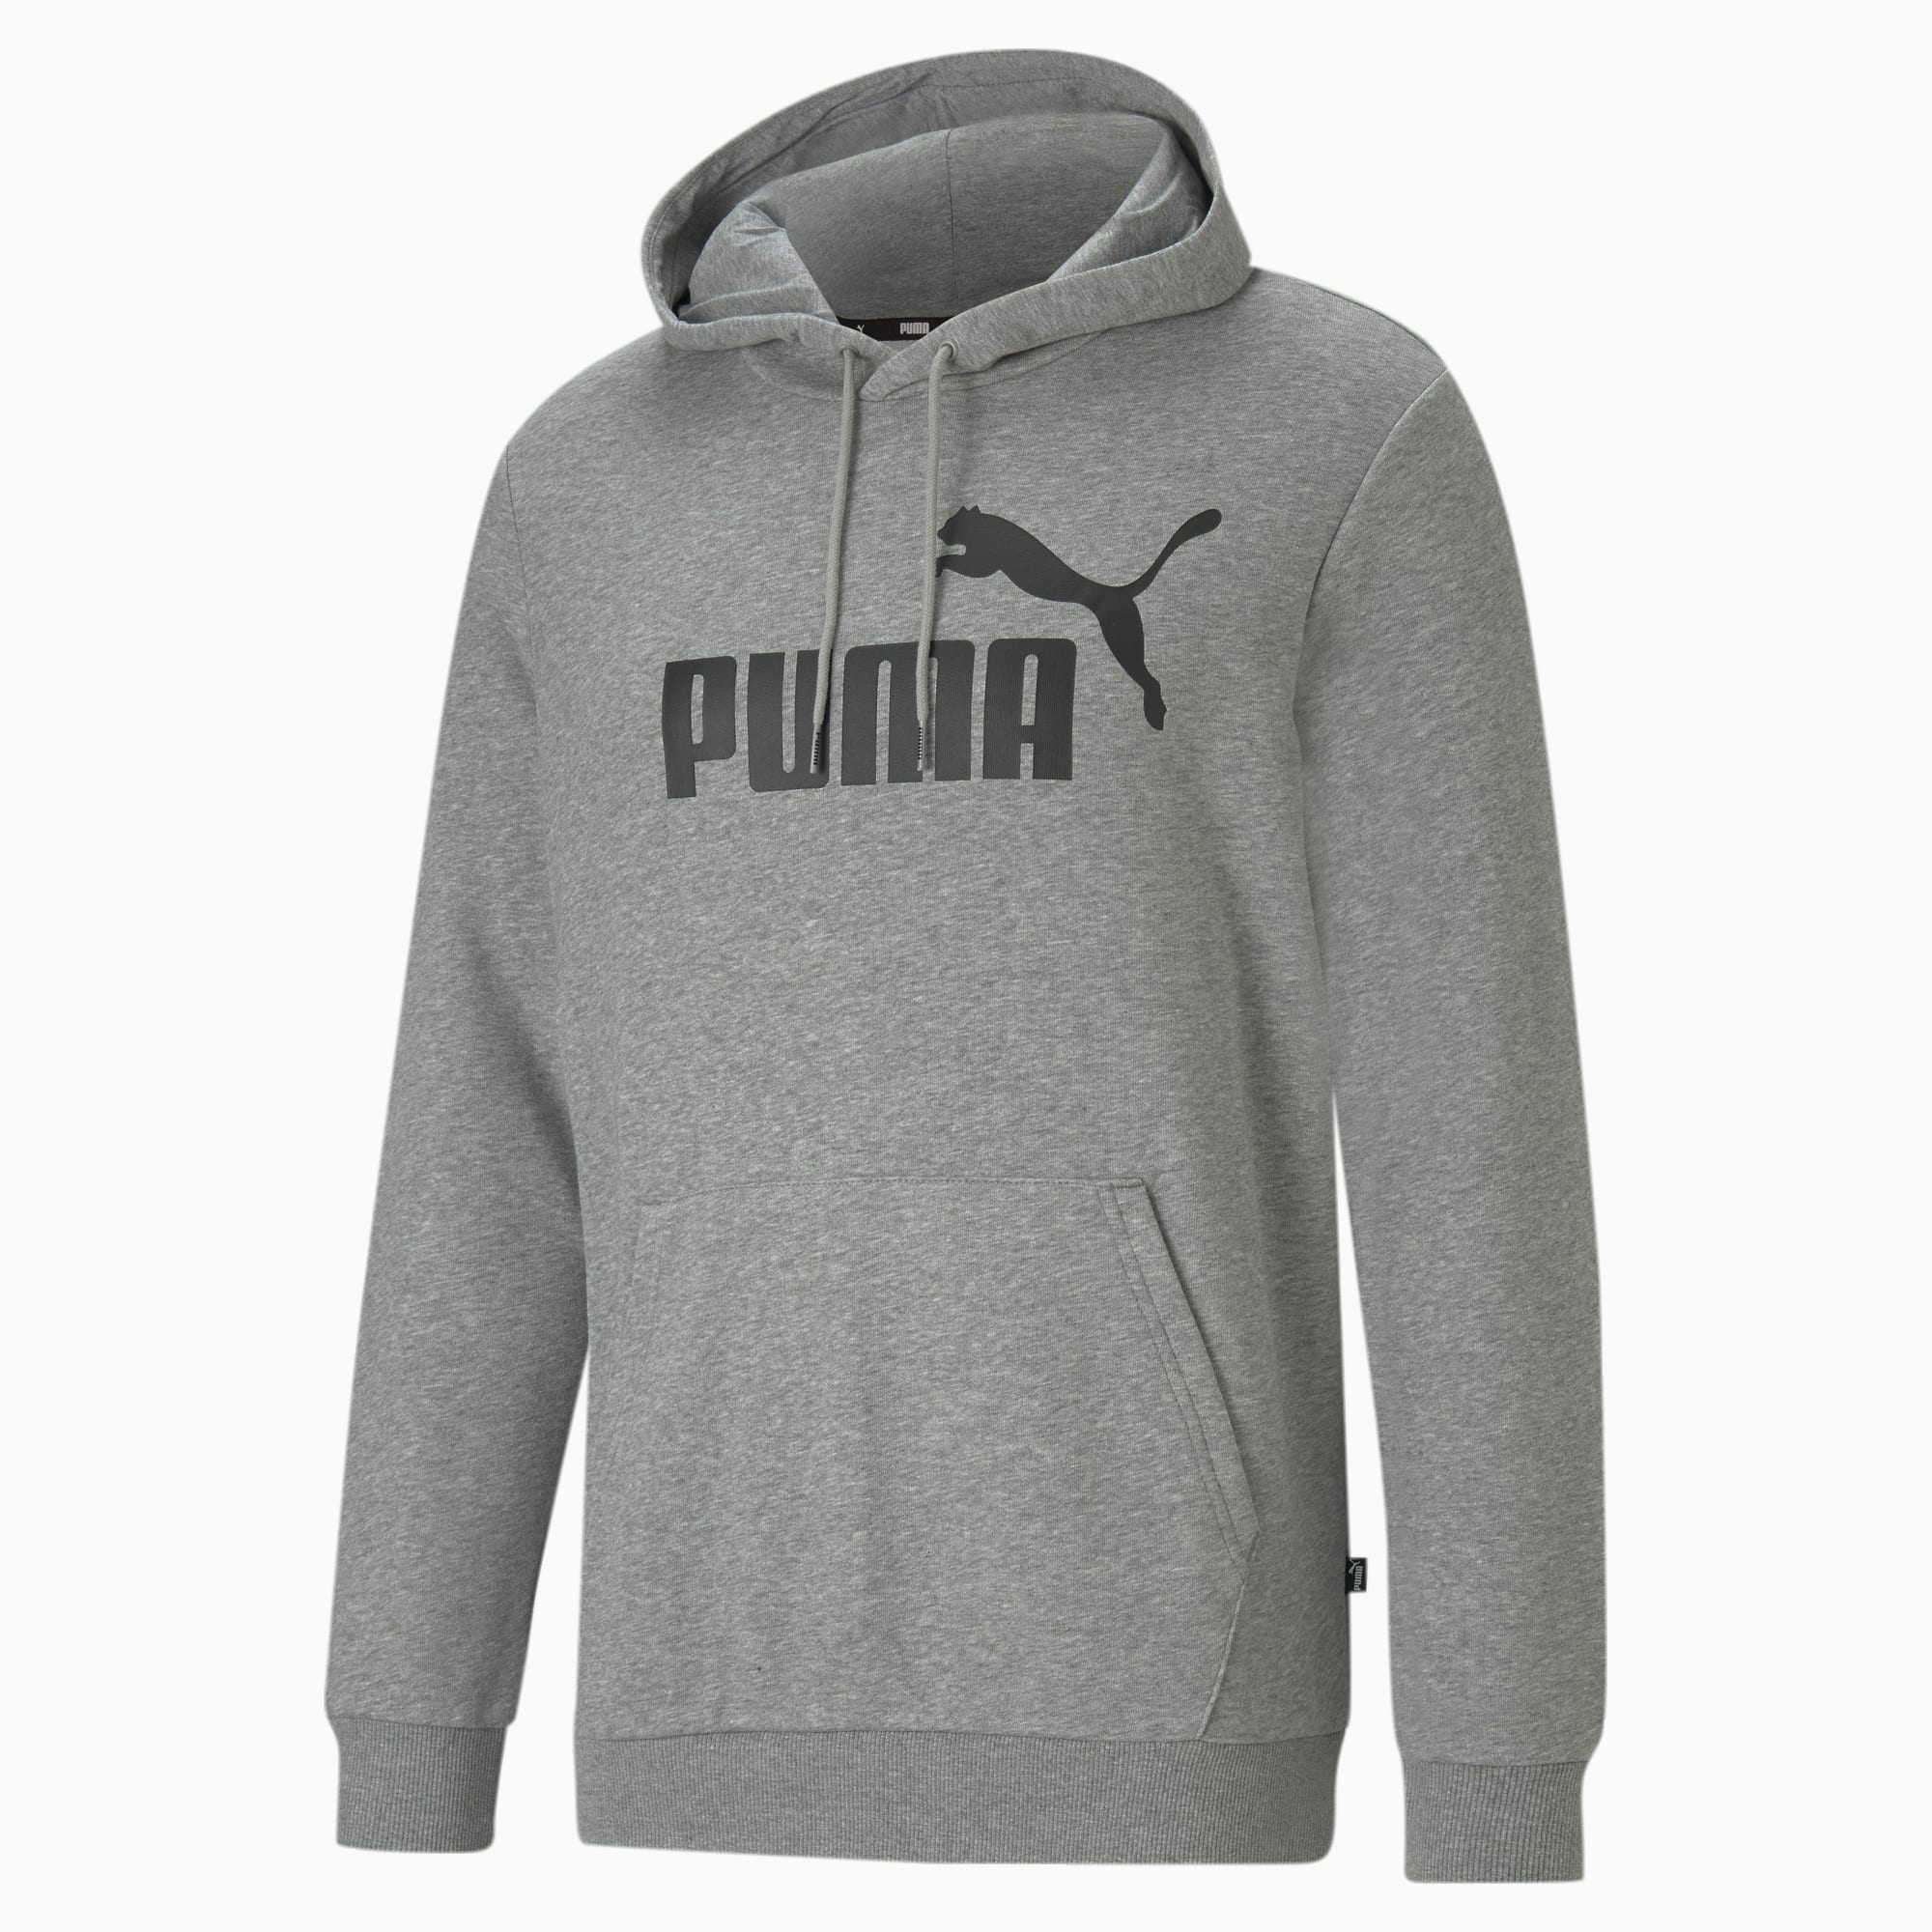 PUMA Essentials Big Logo Hoodie Men, Medium Grey Heather, Clothing